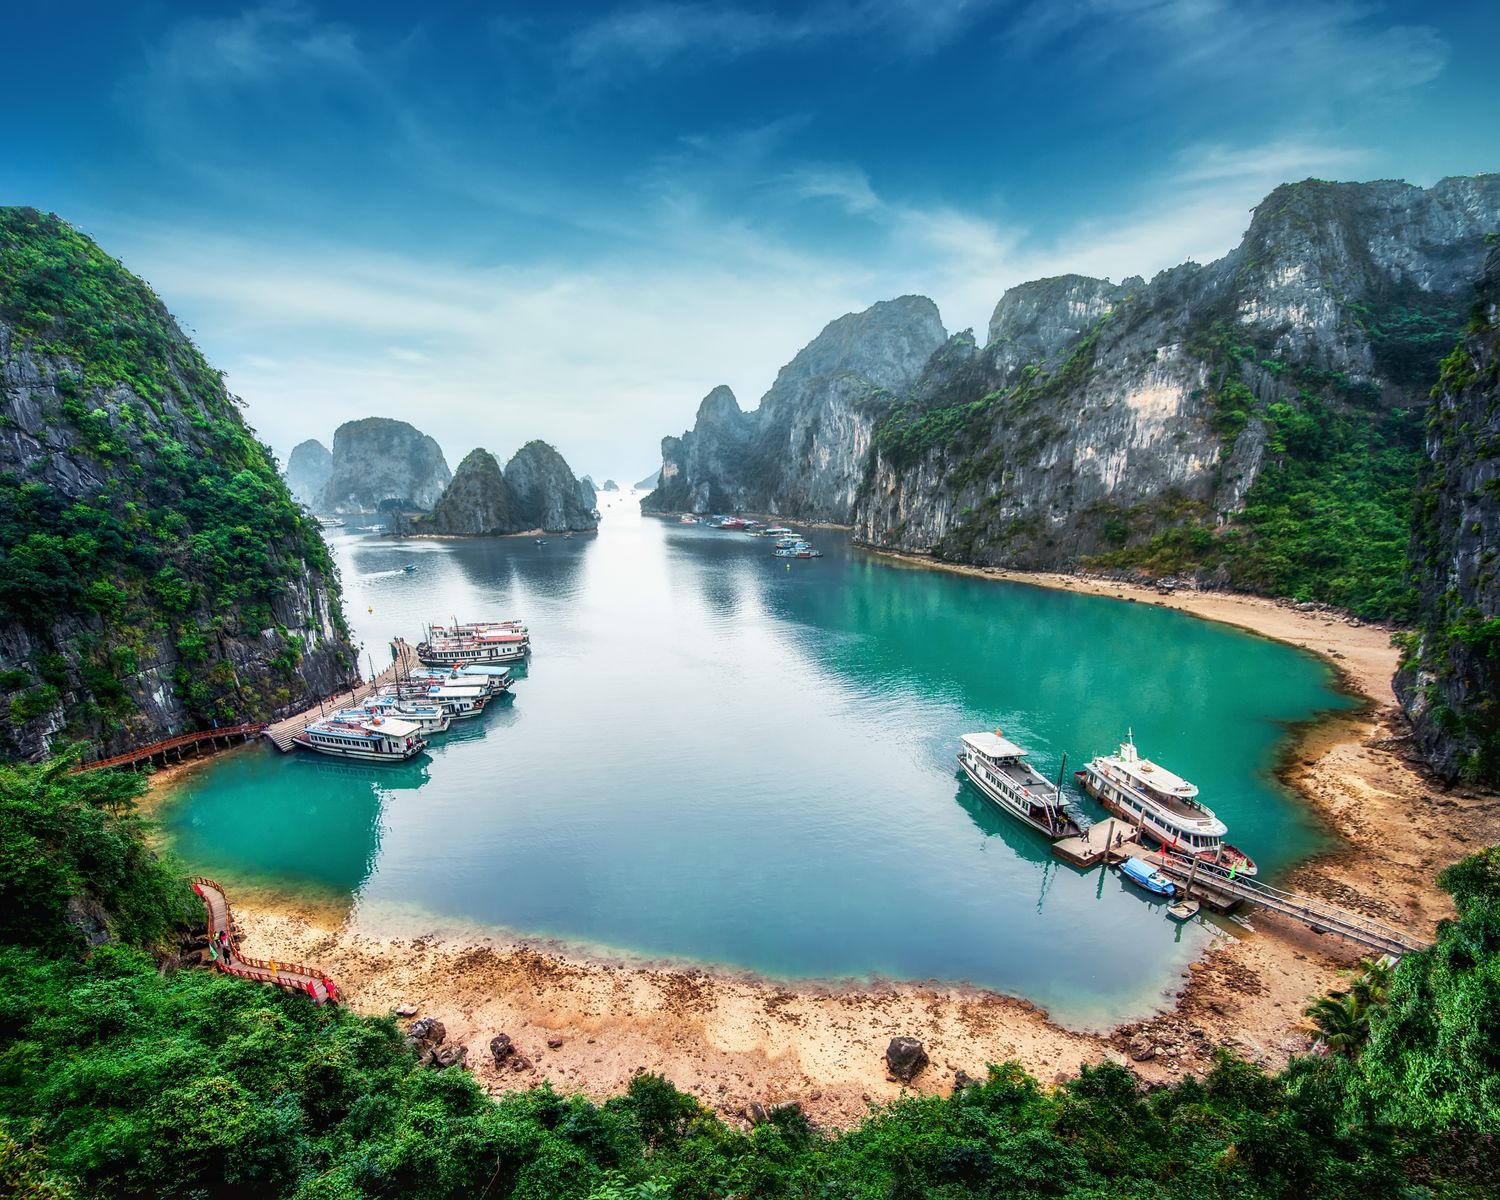 La bahía de Ha Long, Mar de China Meridional, Vietnam, Sudeste de Asia